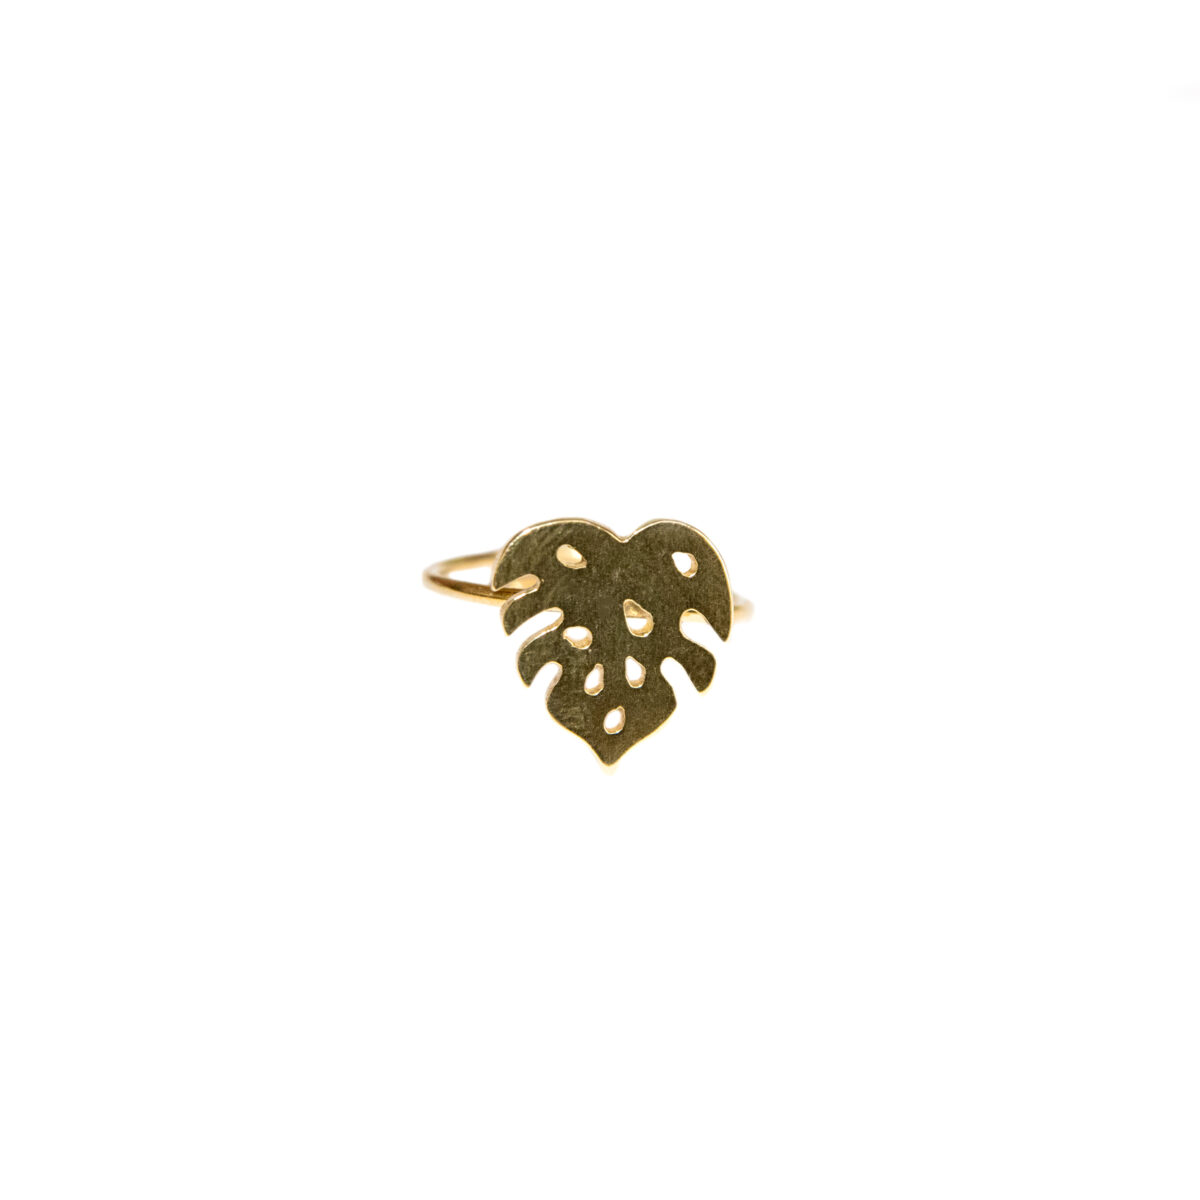 “Tropical” επίχρυσο δαχτυλίδι “Tropical” επίχρυσο δαχτυλίδι “Tropical” επίχρυσο δαχτυλίδι 5